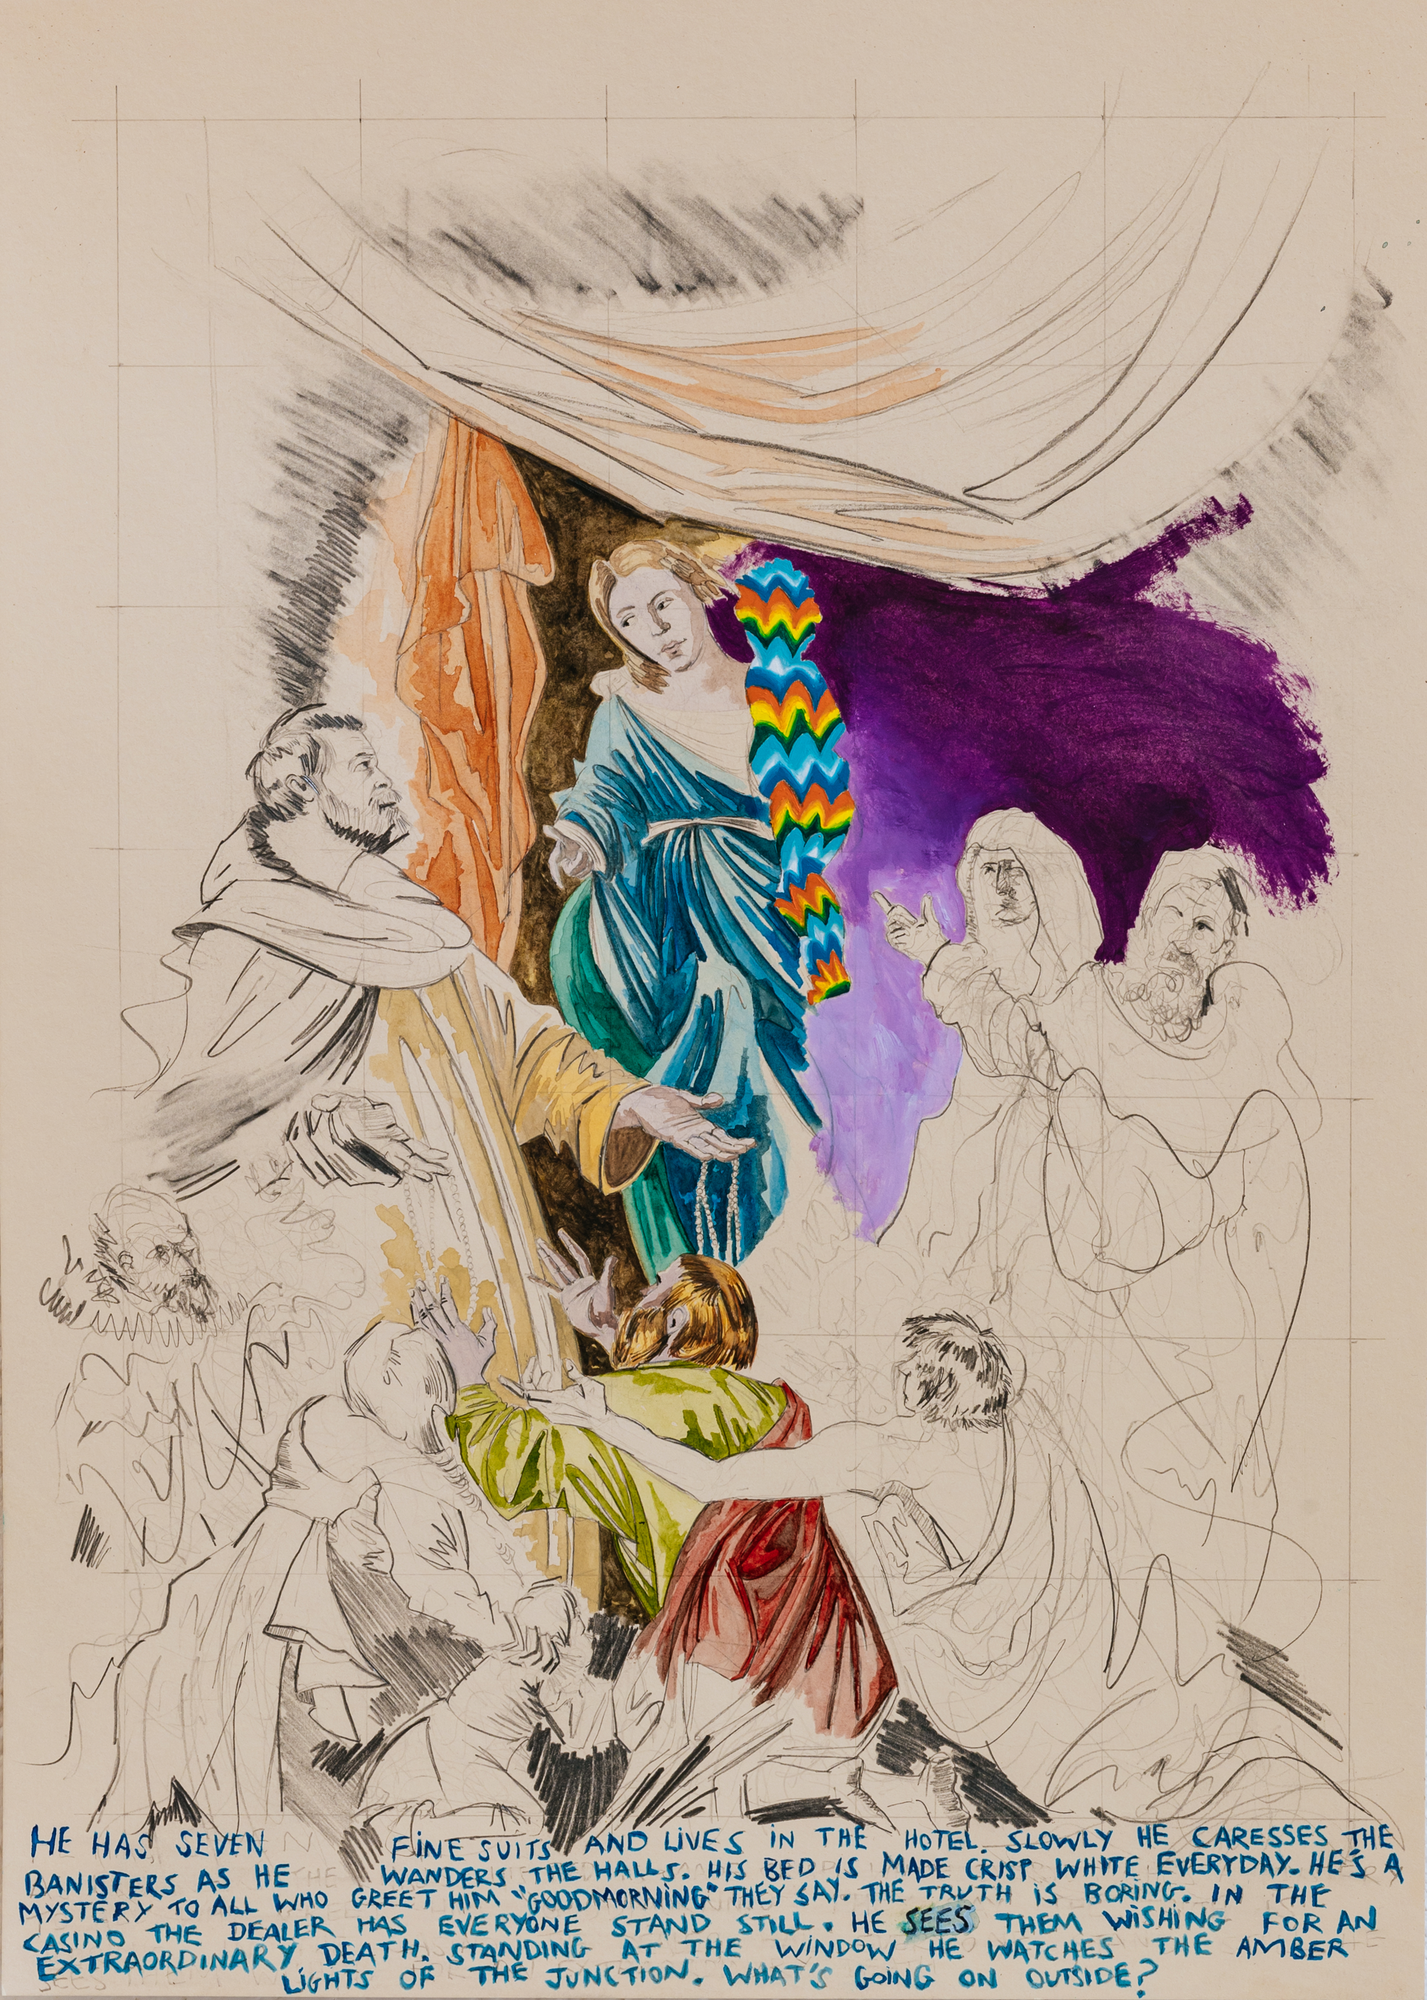 Suite, pencil, watercolour and oil on paper, 2022, 42 x 29.7 cm